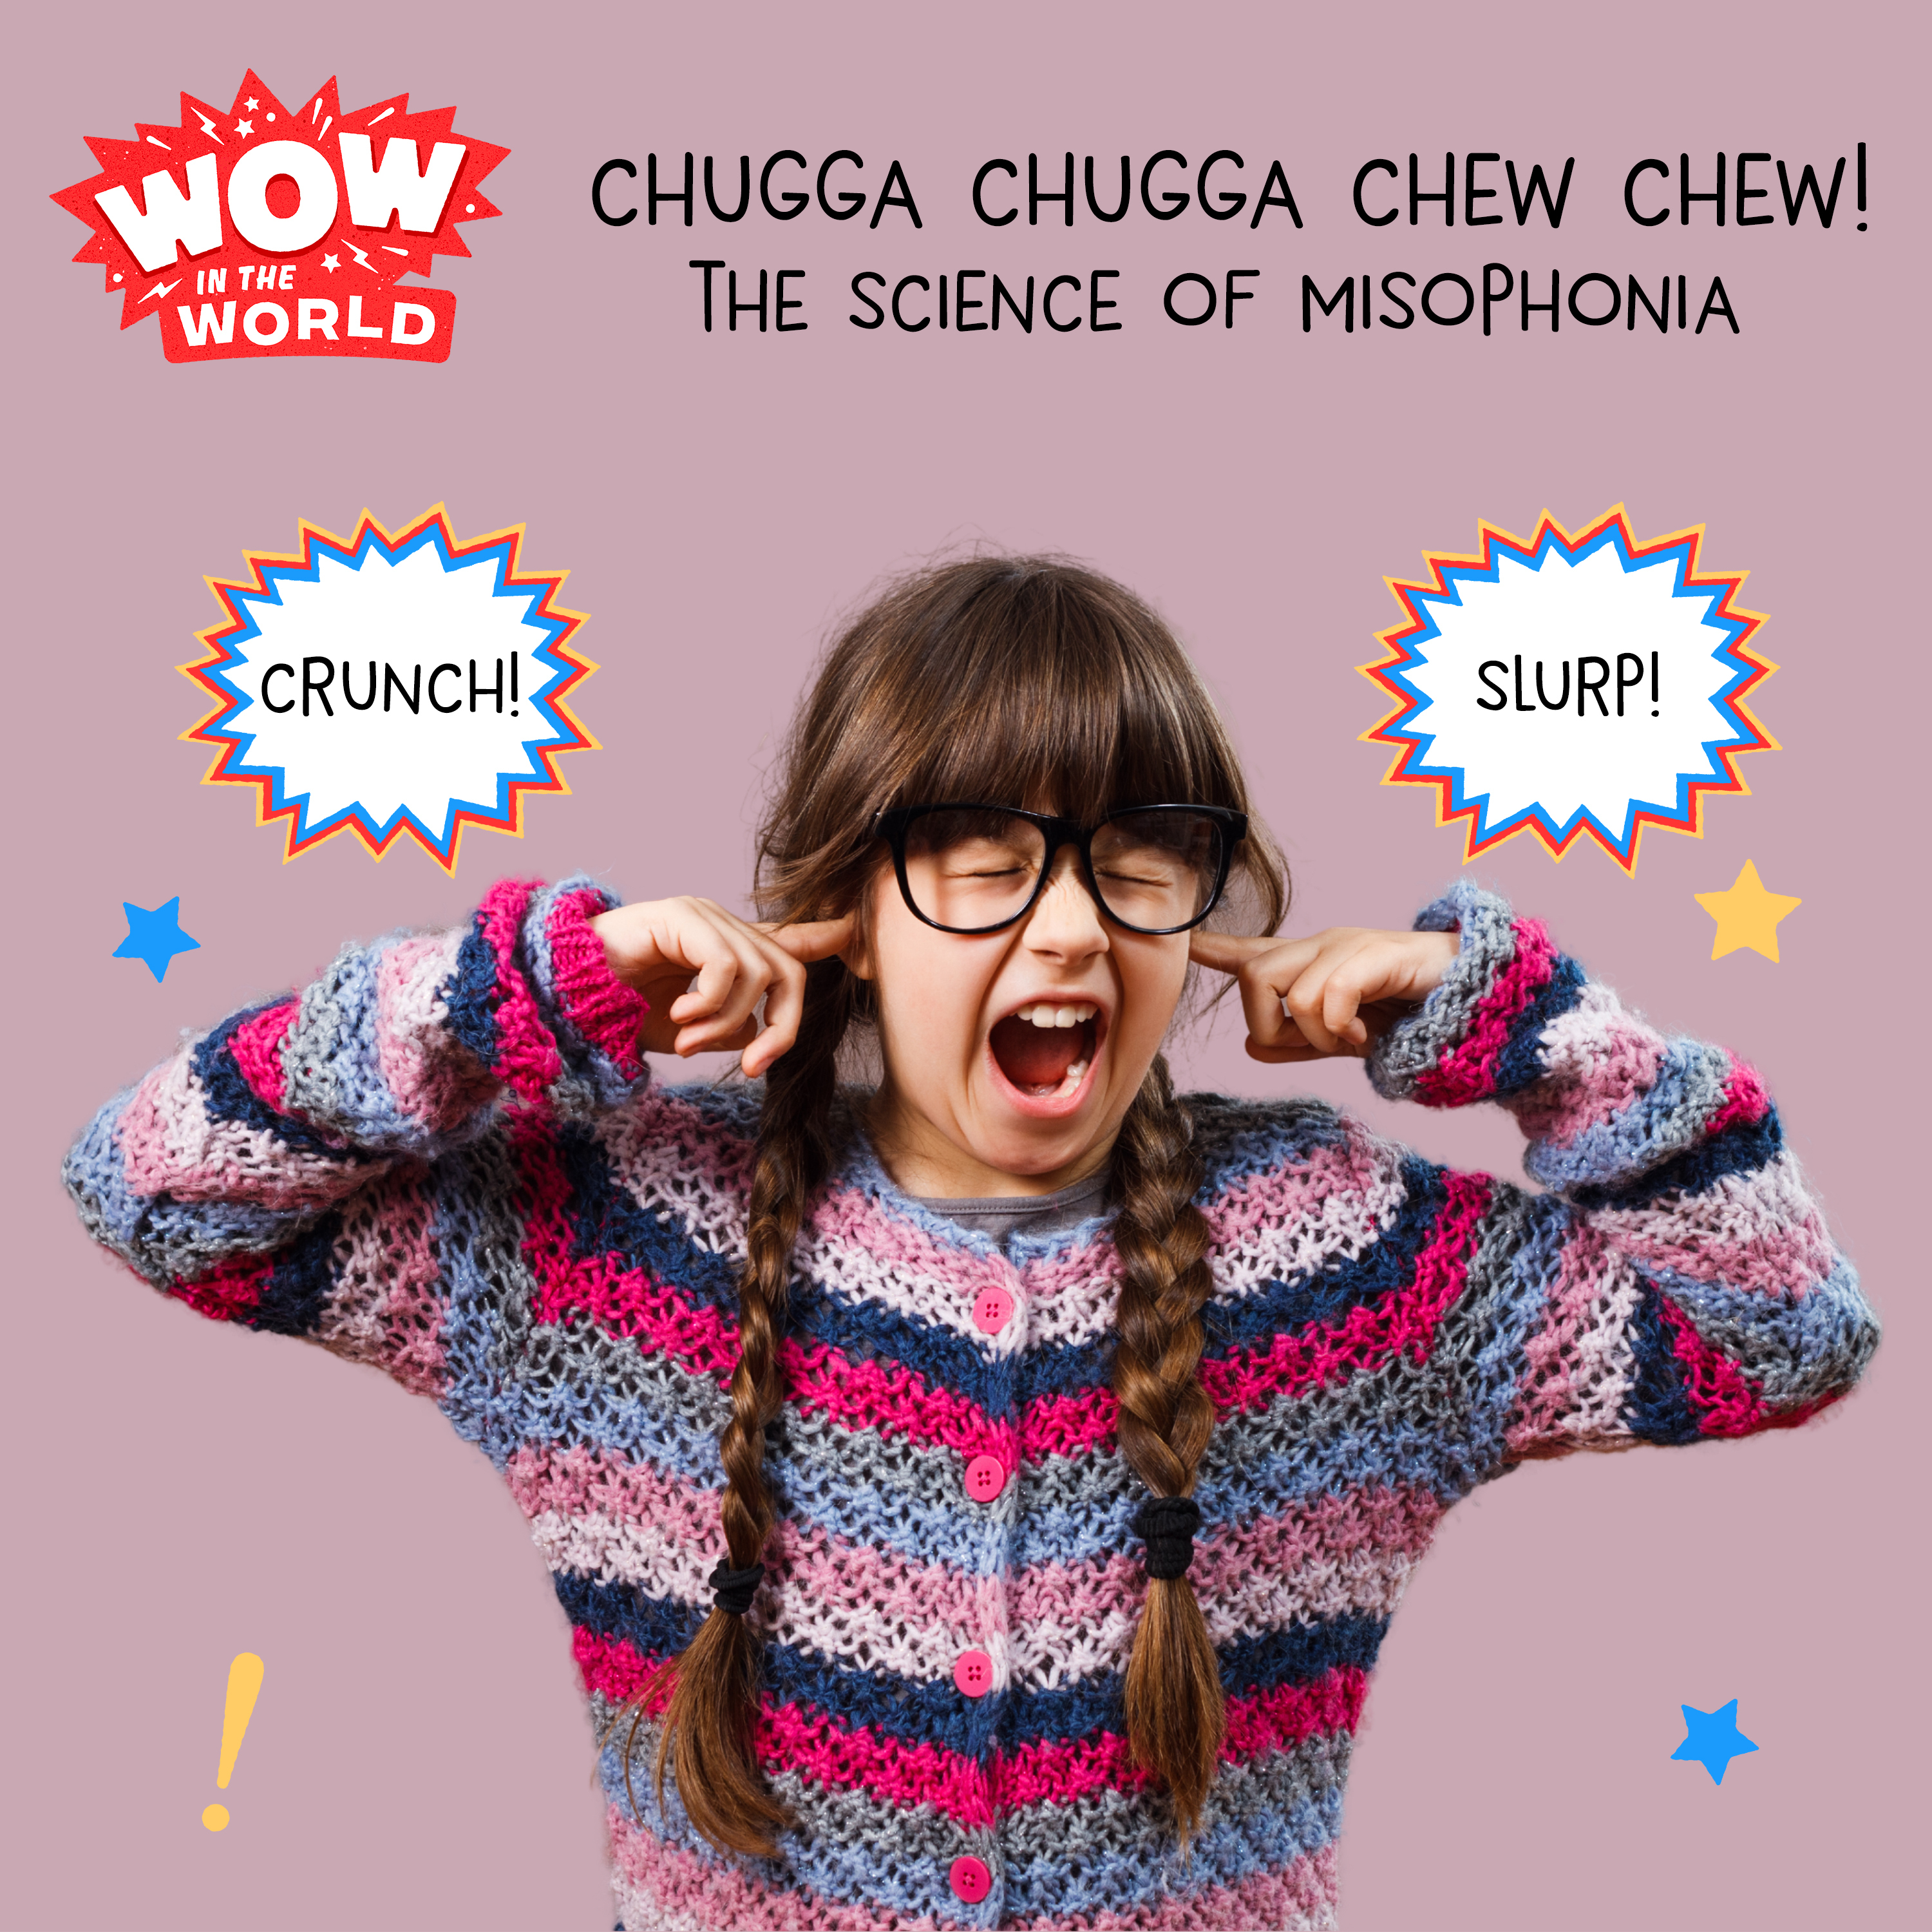 Chugga Chugga CHEW CHEW! The Science of Misophonia (6/5/23)